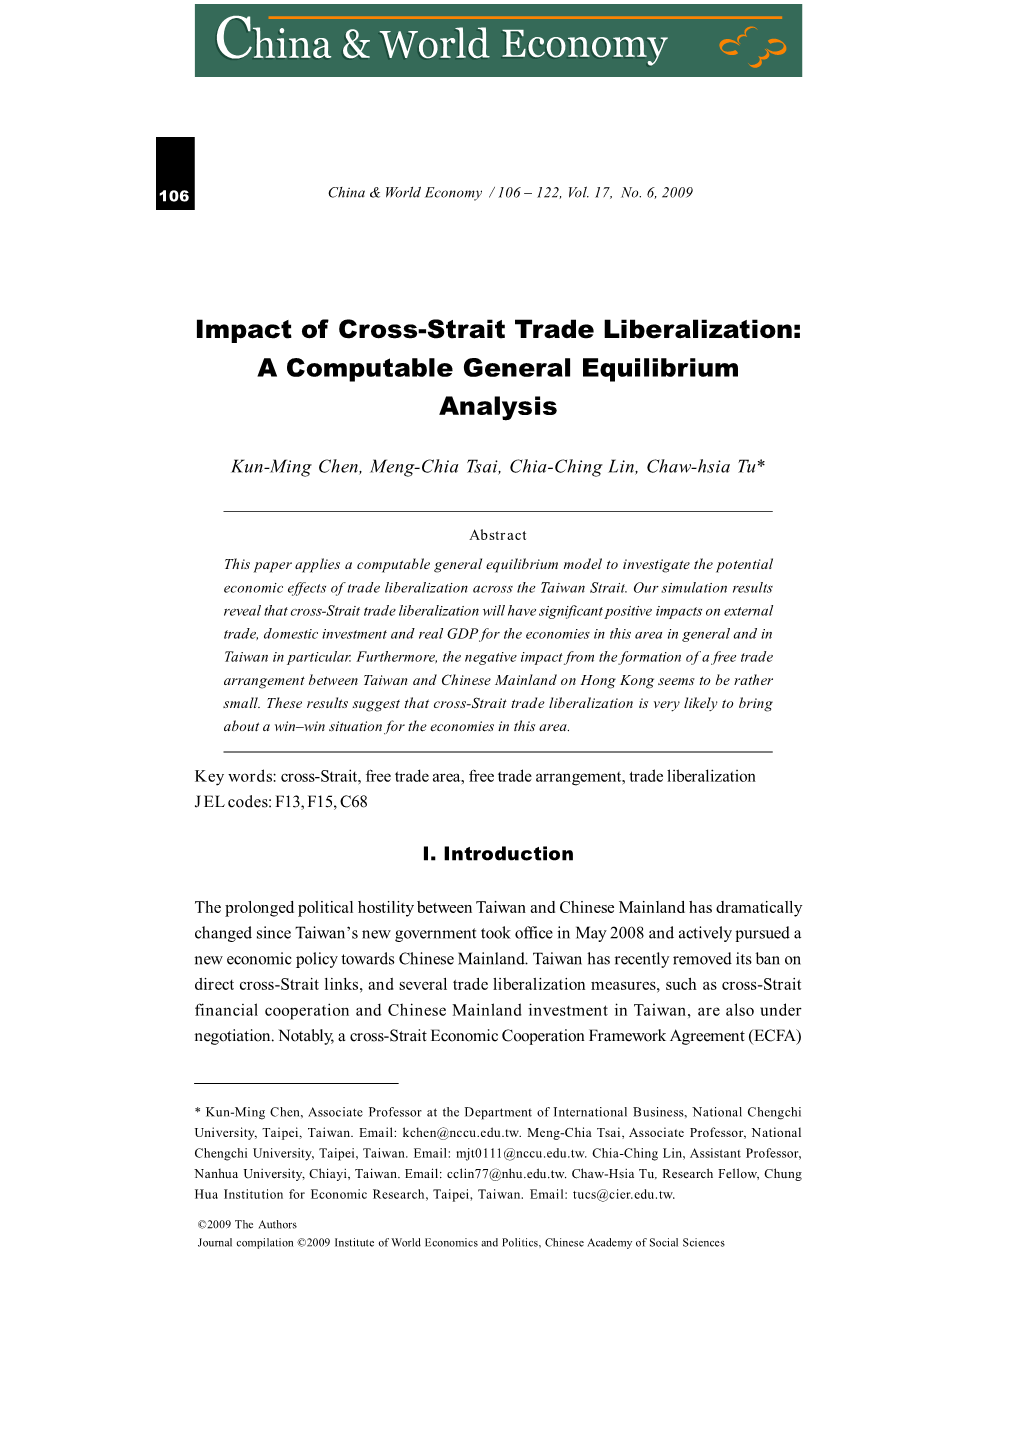 Impact of Crossstrait Trade Liberalization: a Computable